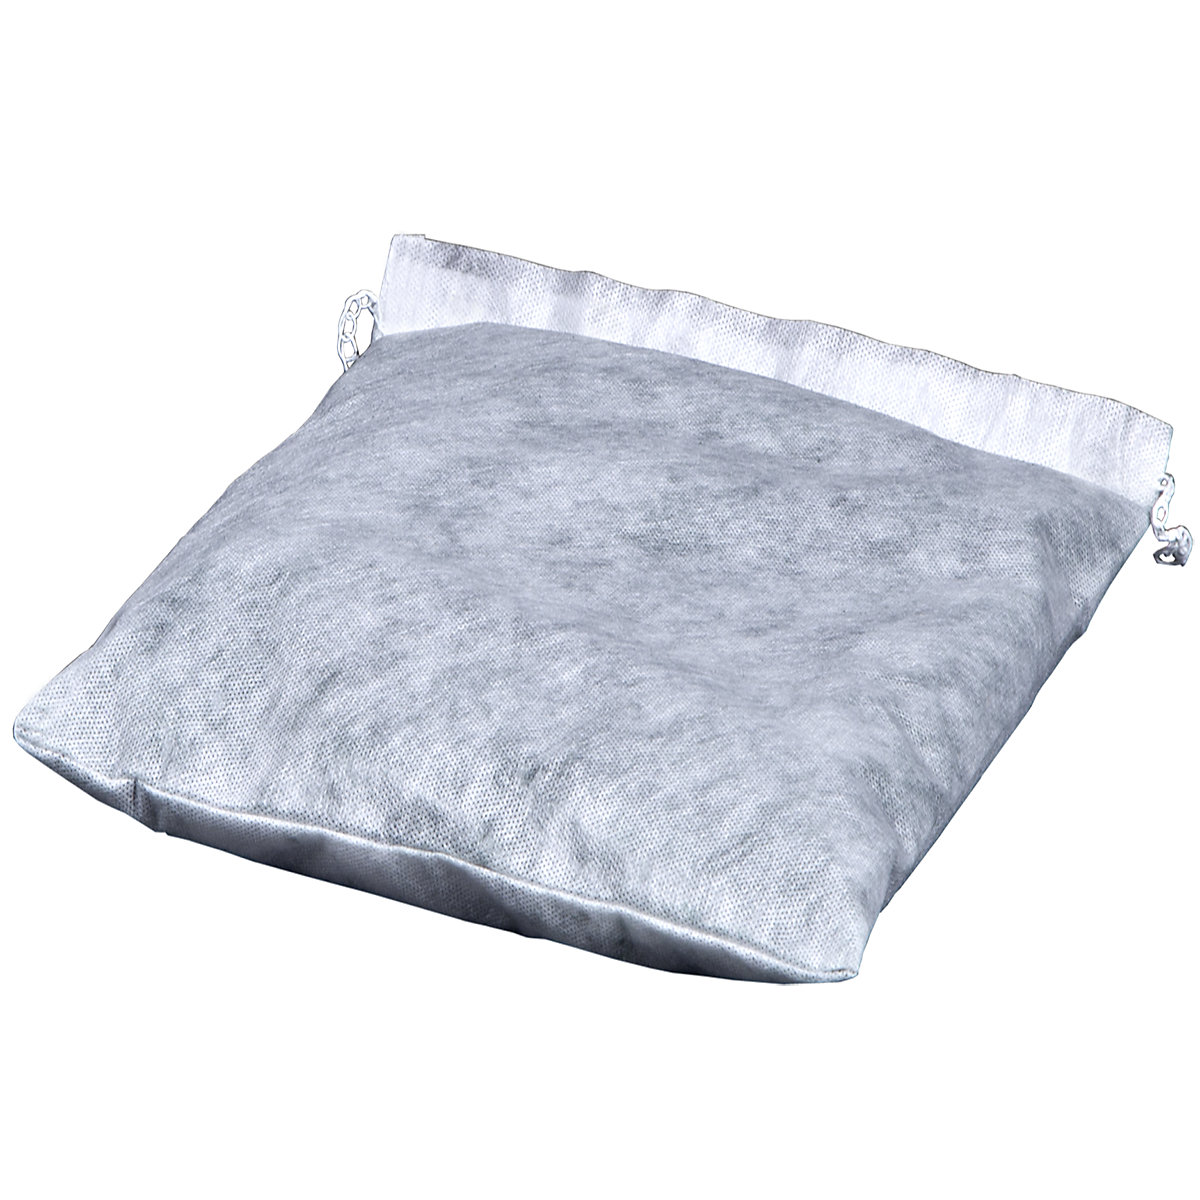 Absorbent cushion